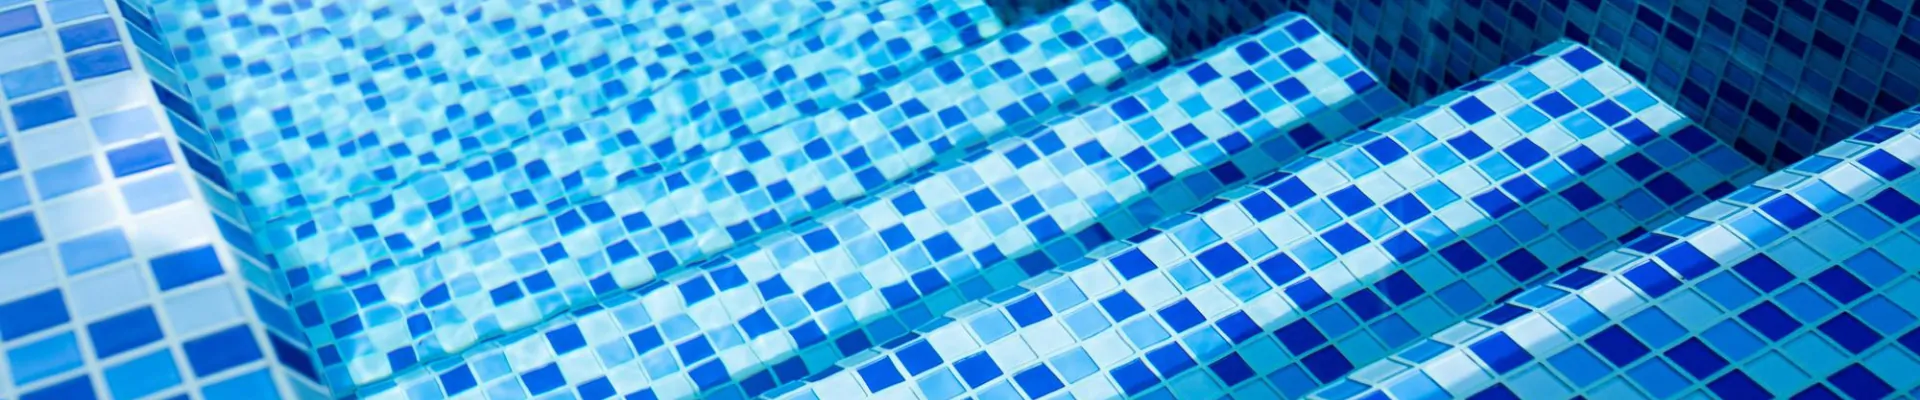 piscinas de gresite antideslizante